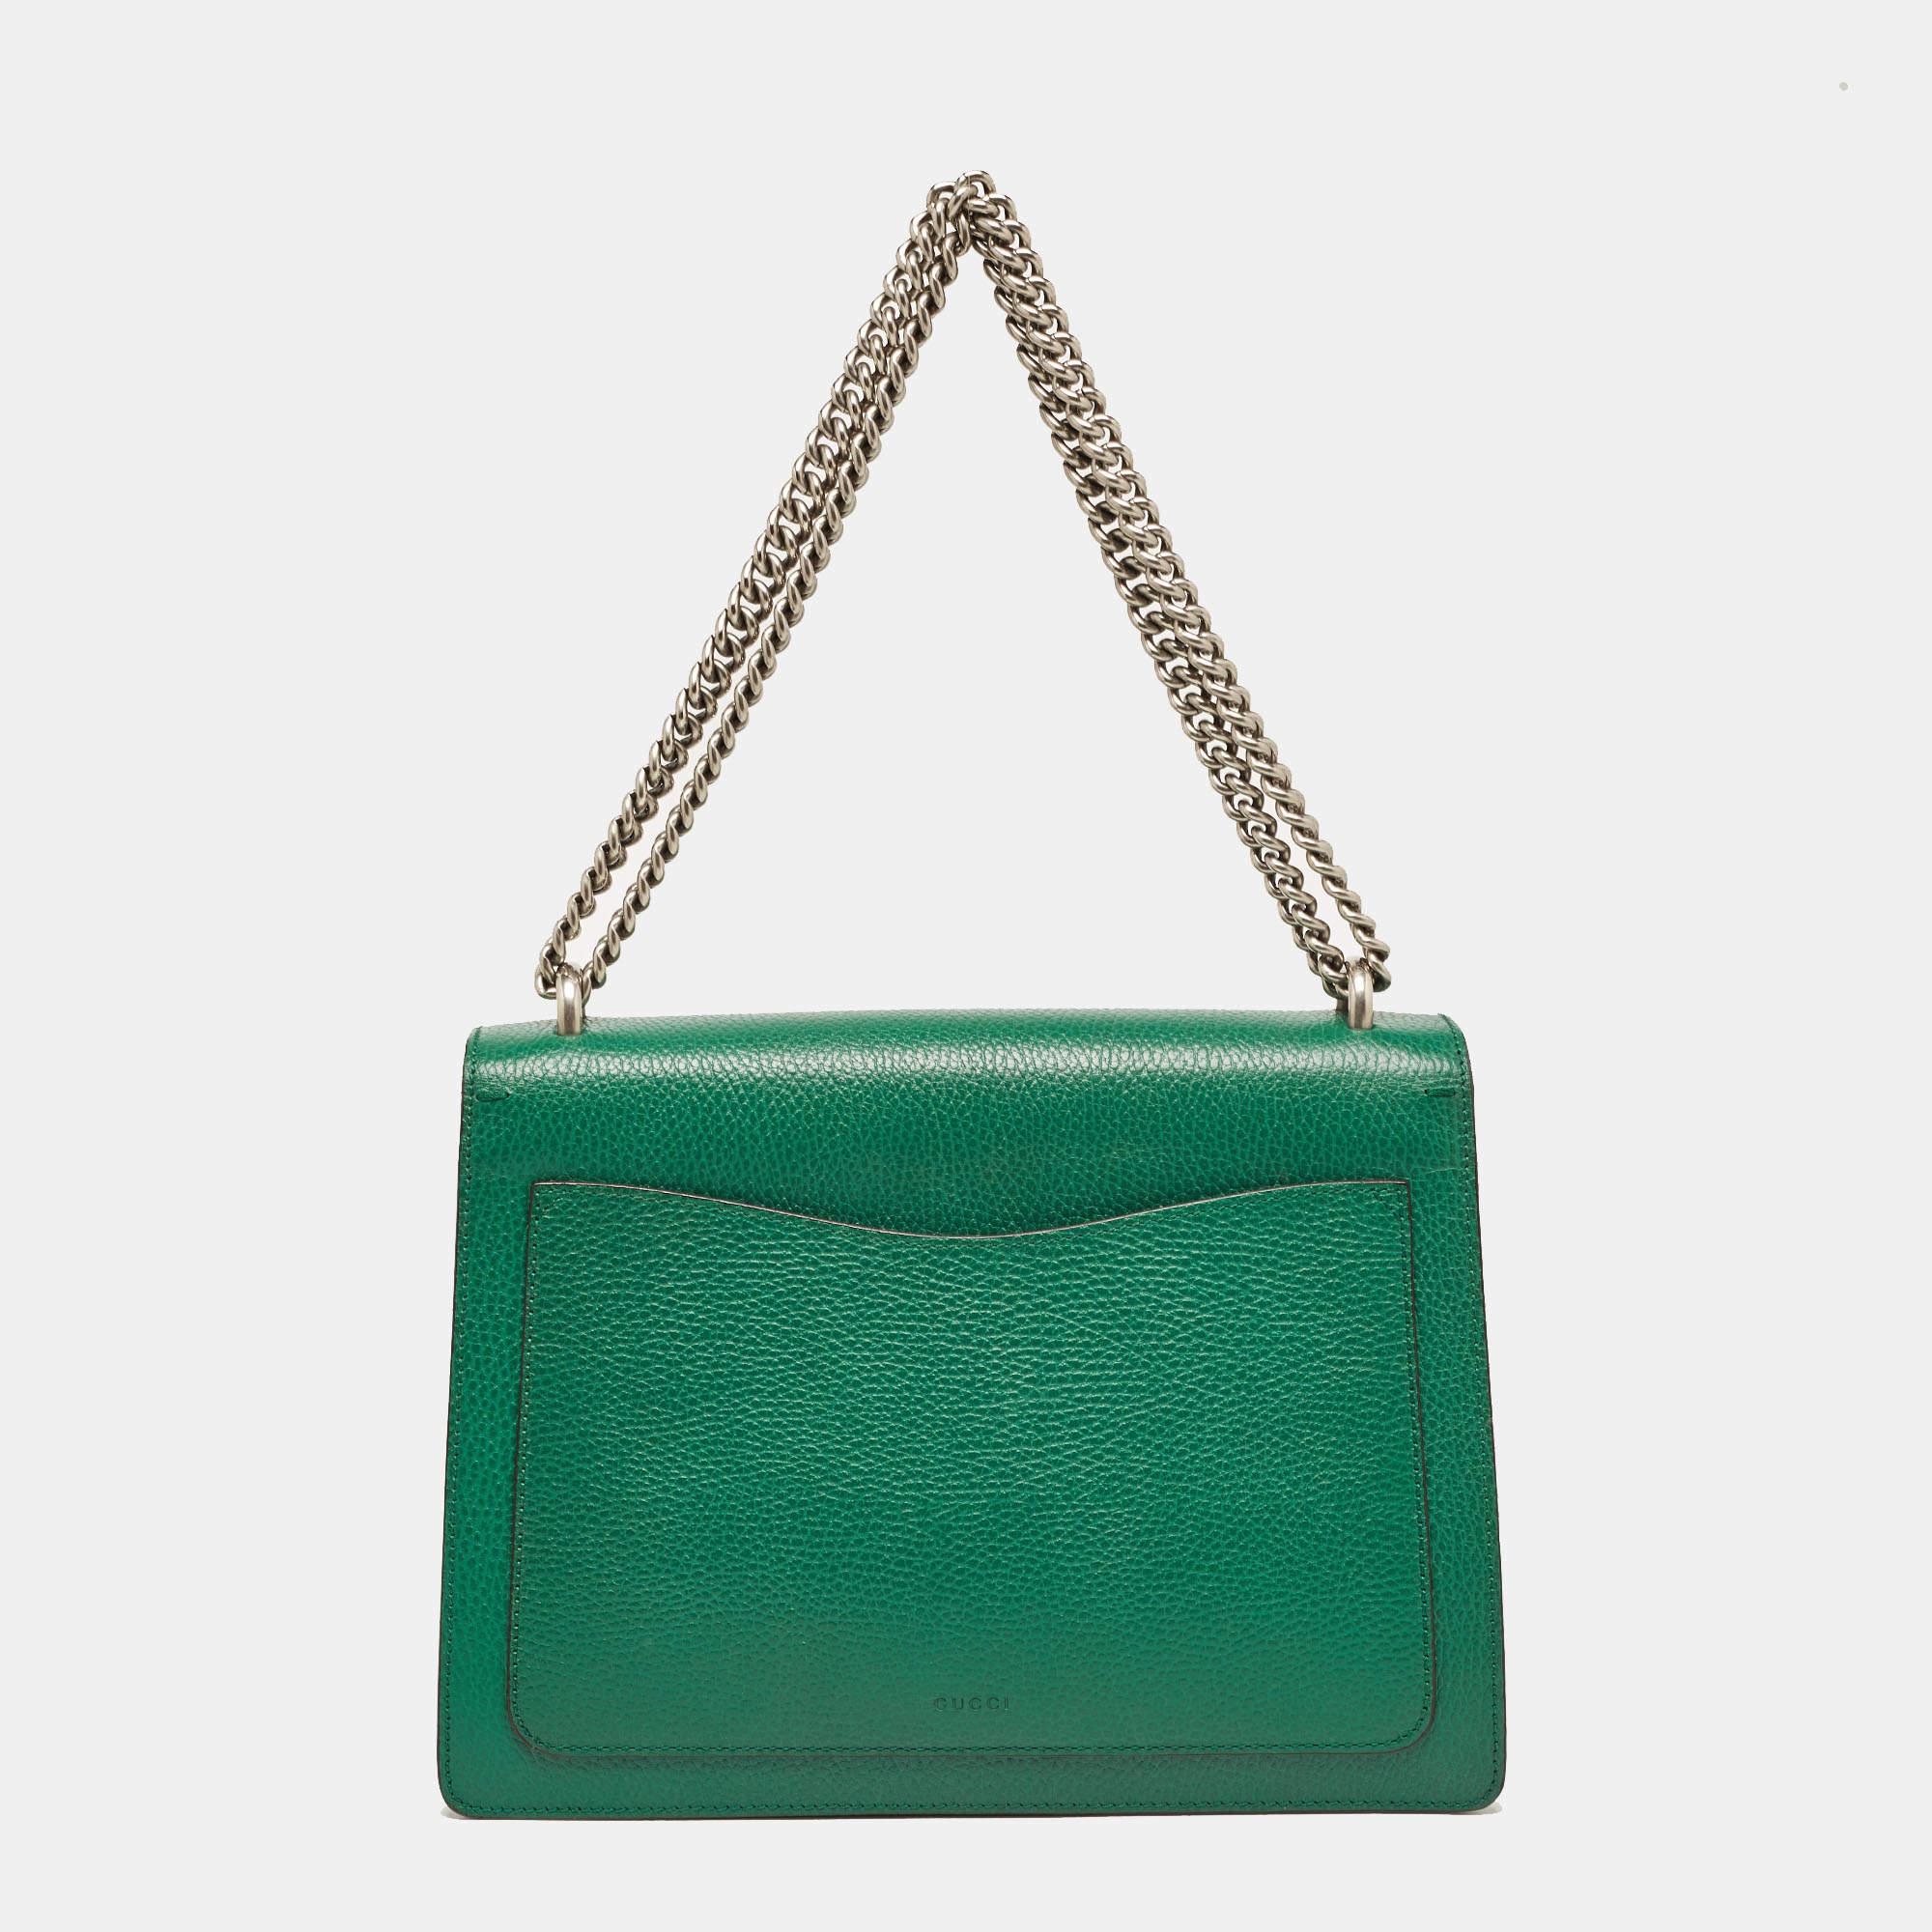 Gucci Green Leather Medium Dionysus Shoulder Bag 6